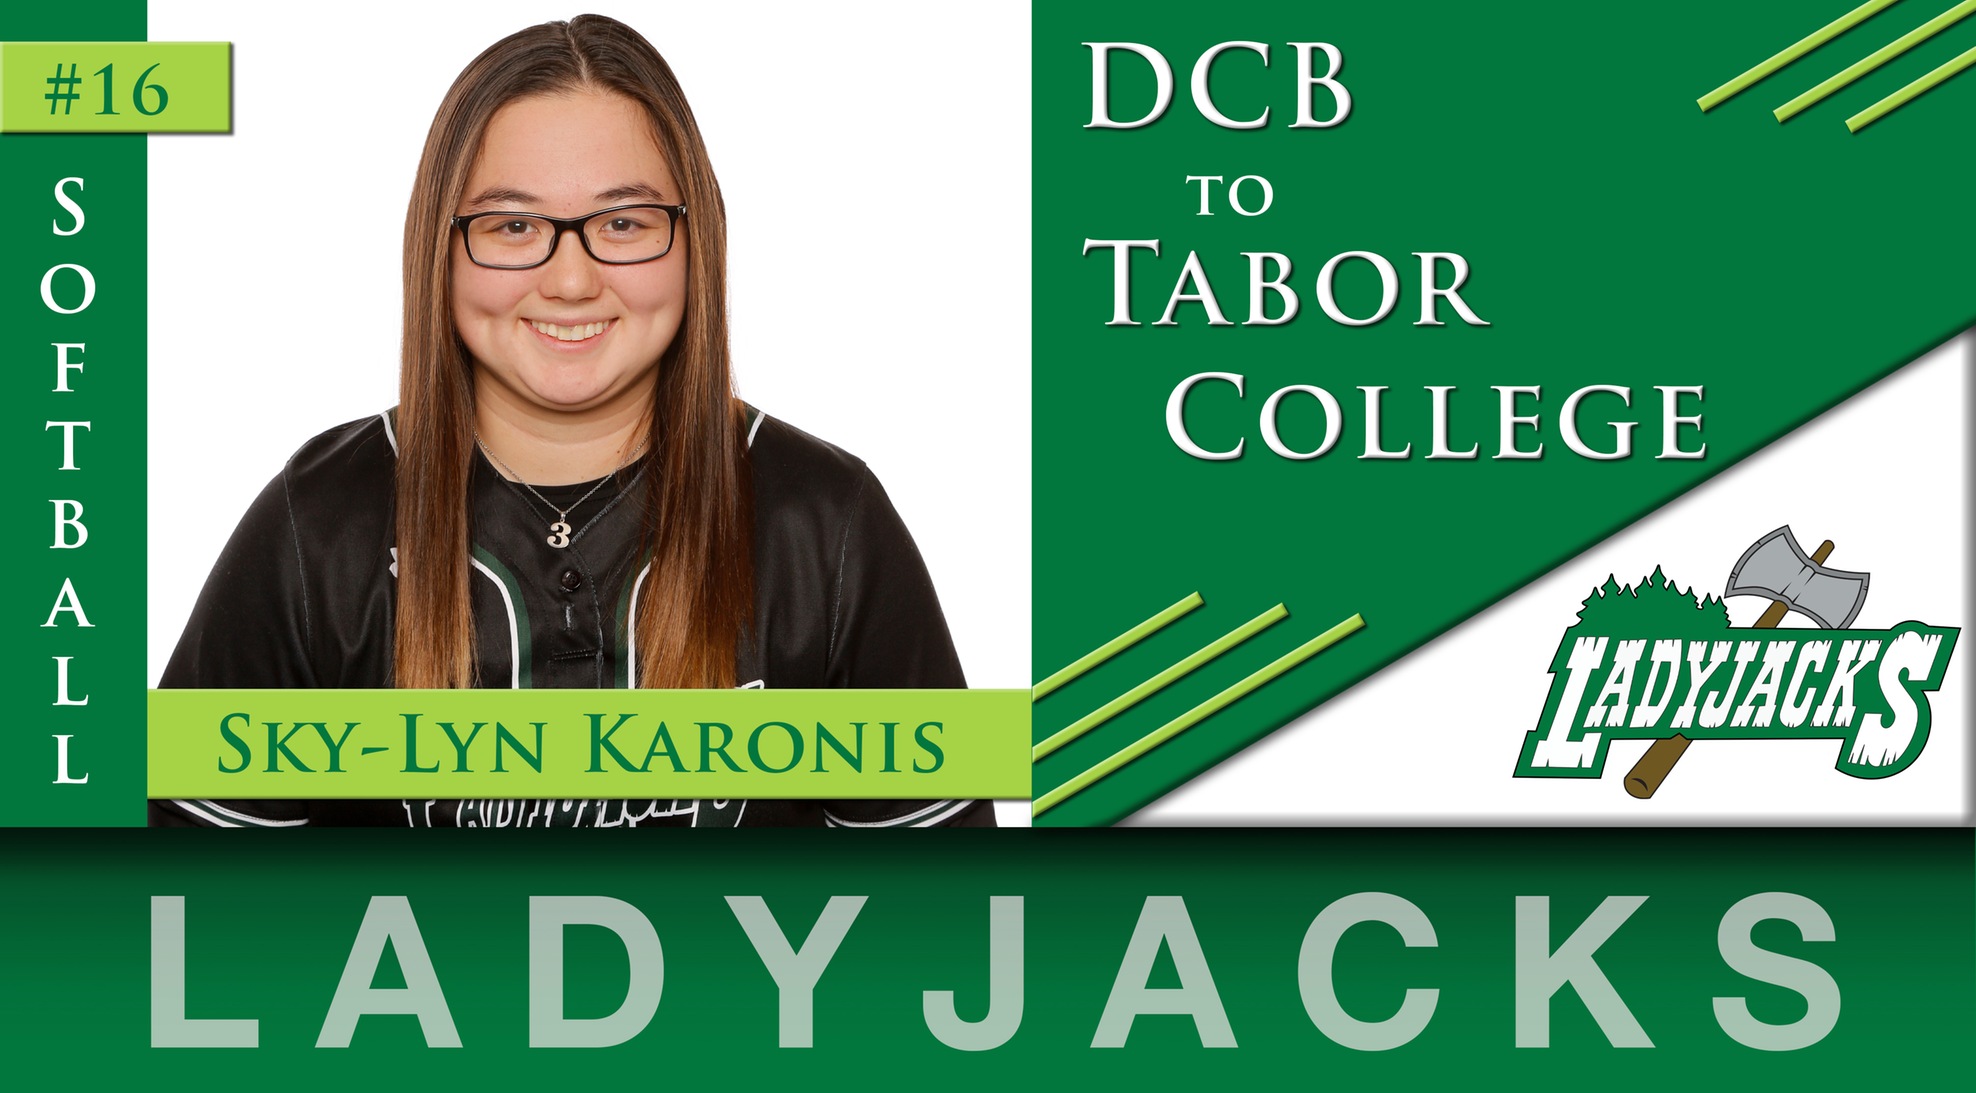 Sophomore Ladyjacks catcher Sky-Lyn Karonis will be joining the roster of Tabor College in Hillsboro, Kansas for the 2020-21 season.